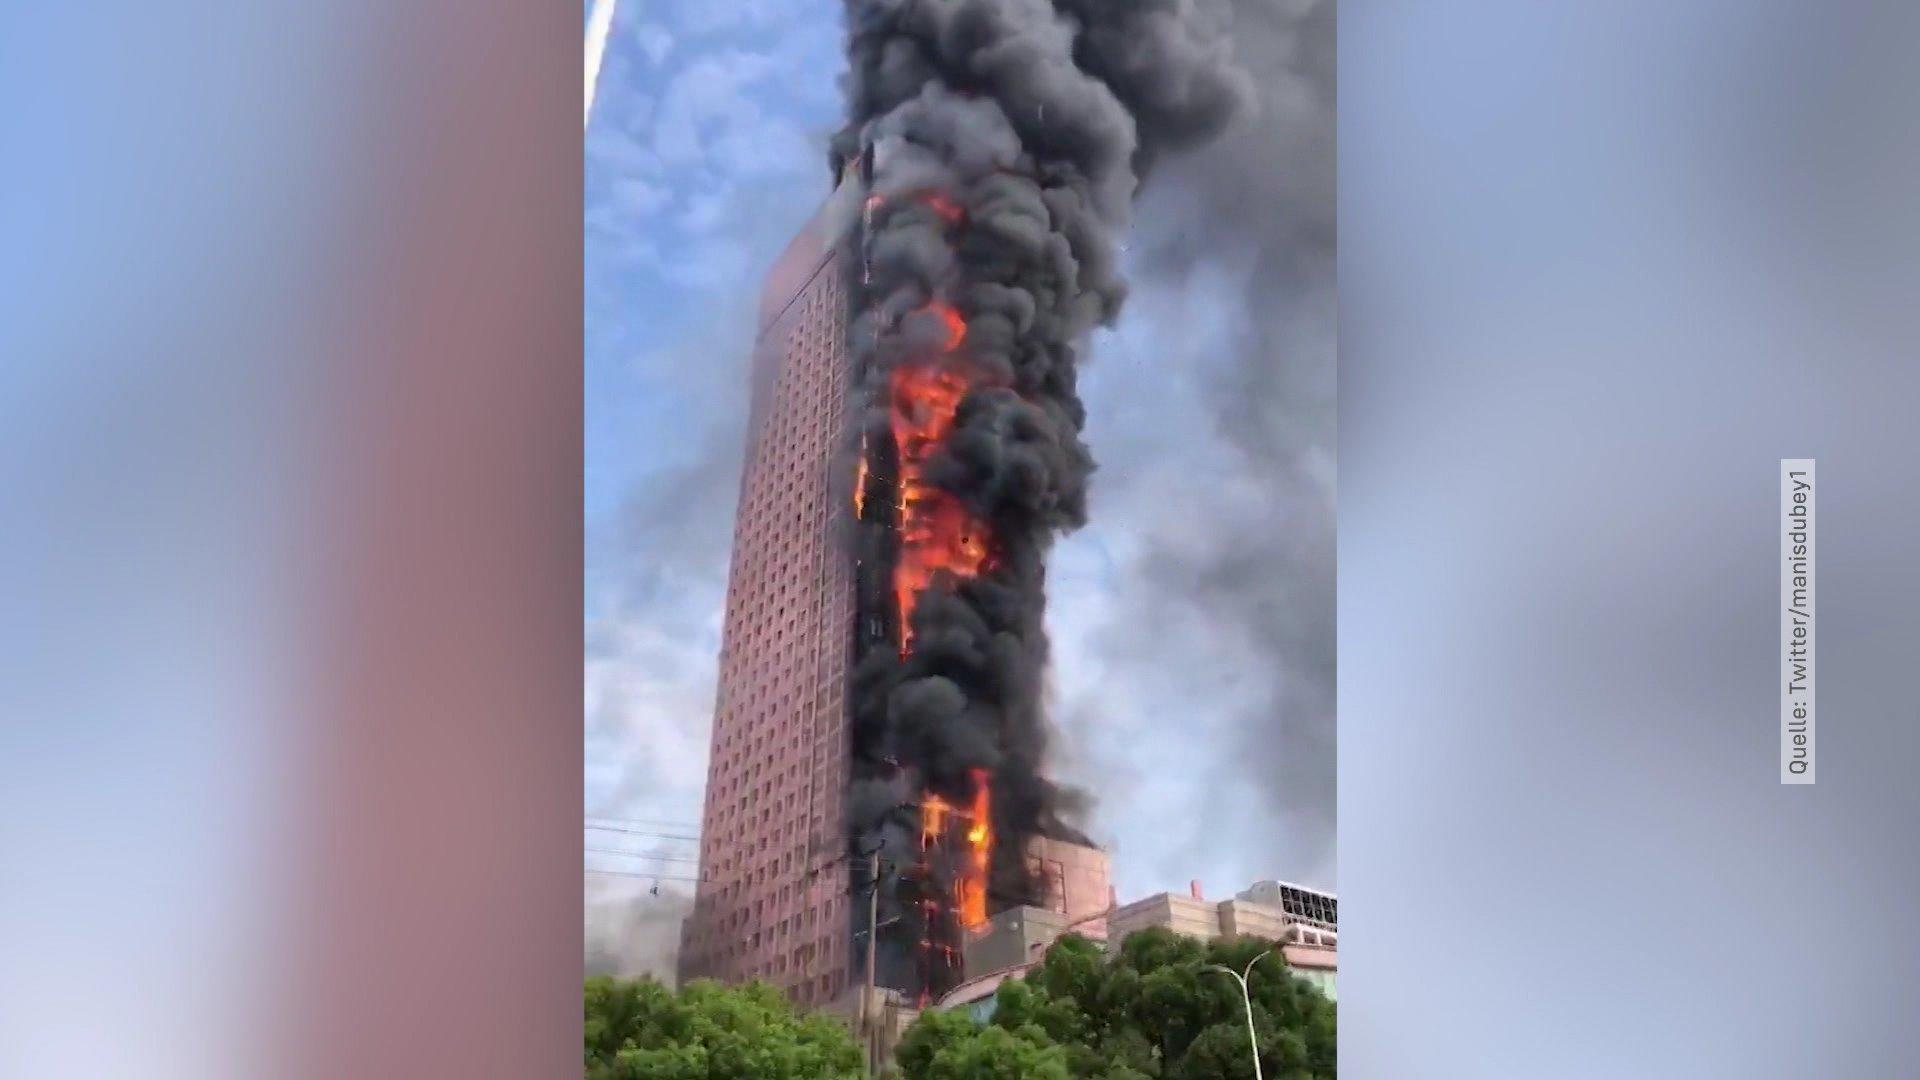 Skyscraper Burns In China Telecom Building In Flames